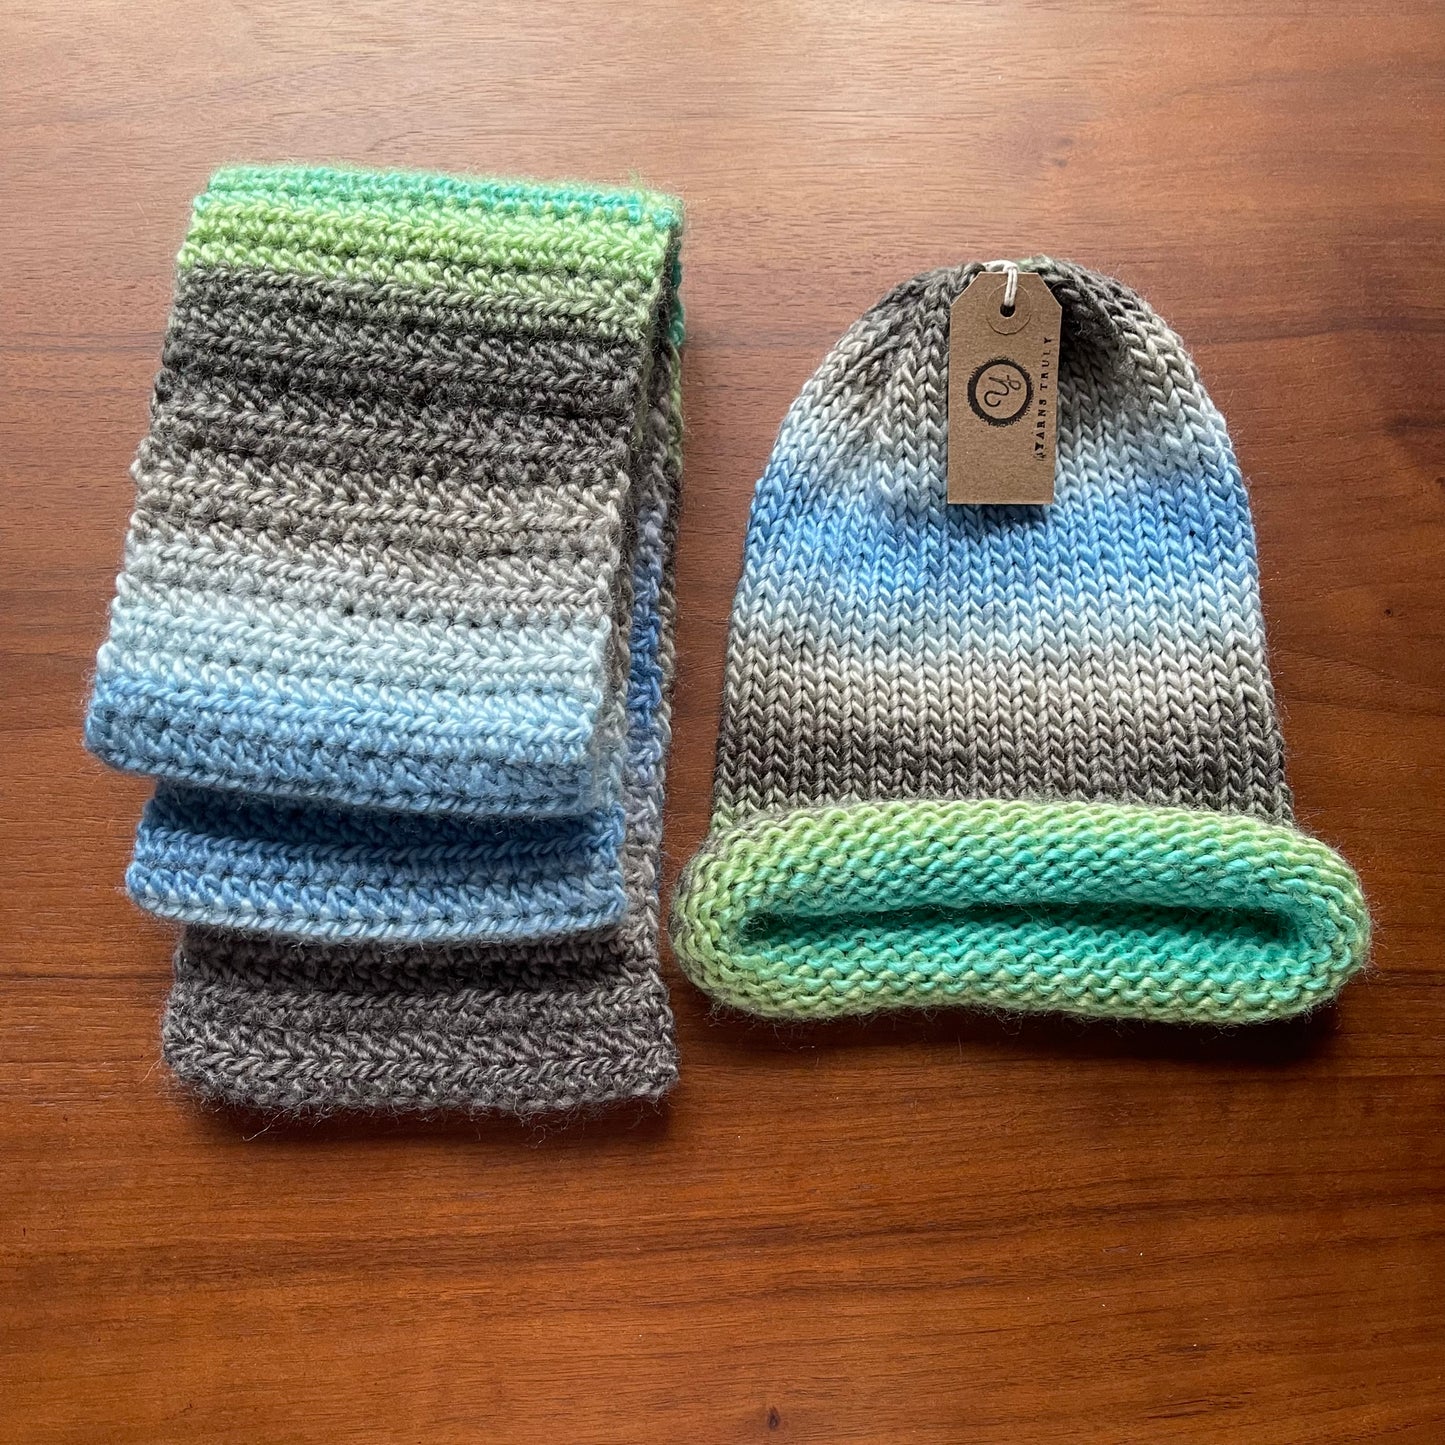 Handmade Ocean Shades crochet scarf